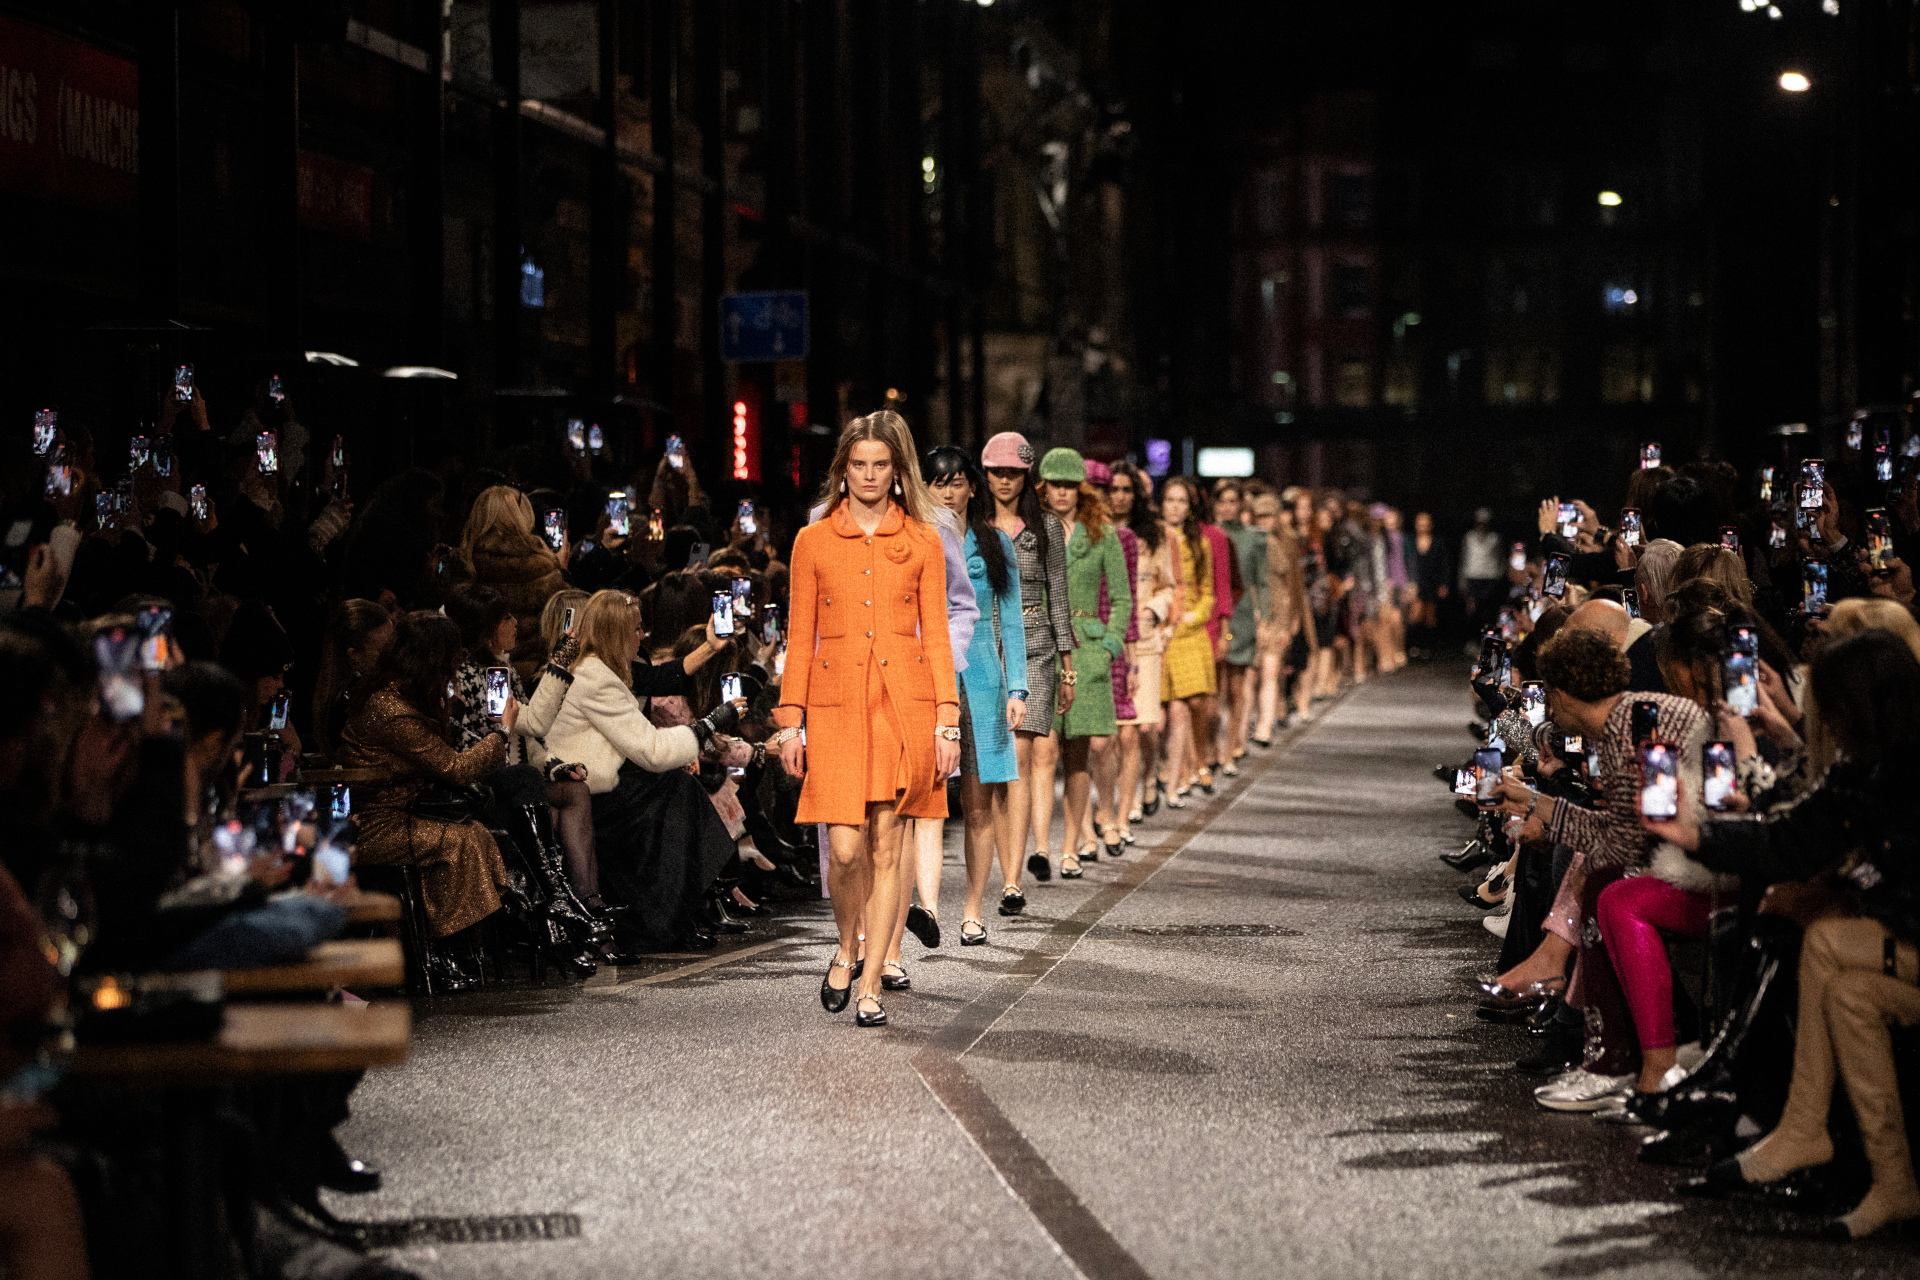 Chanel models walking runway in Manchester